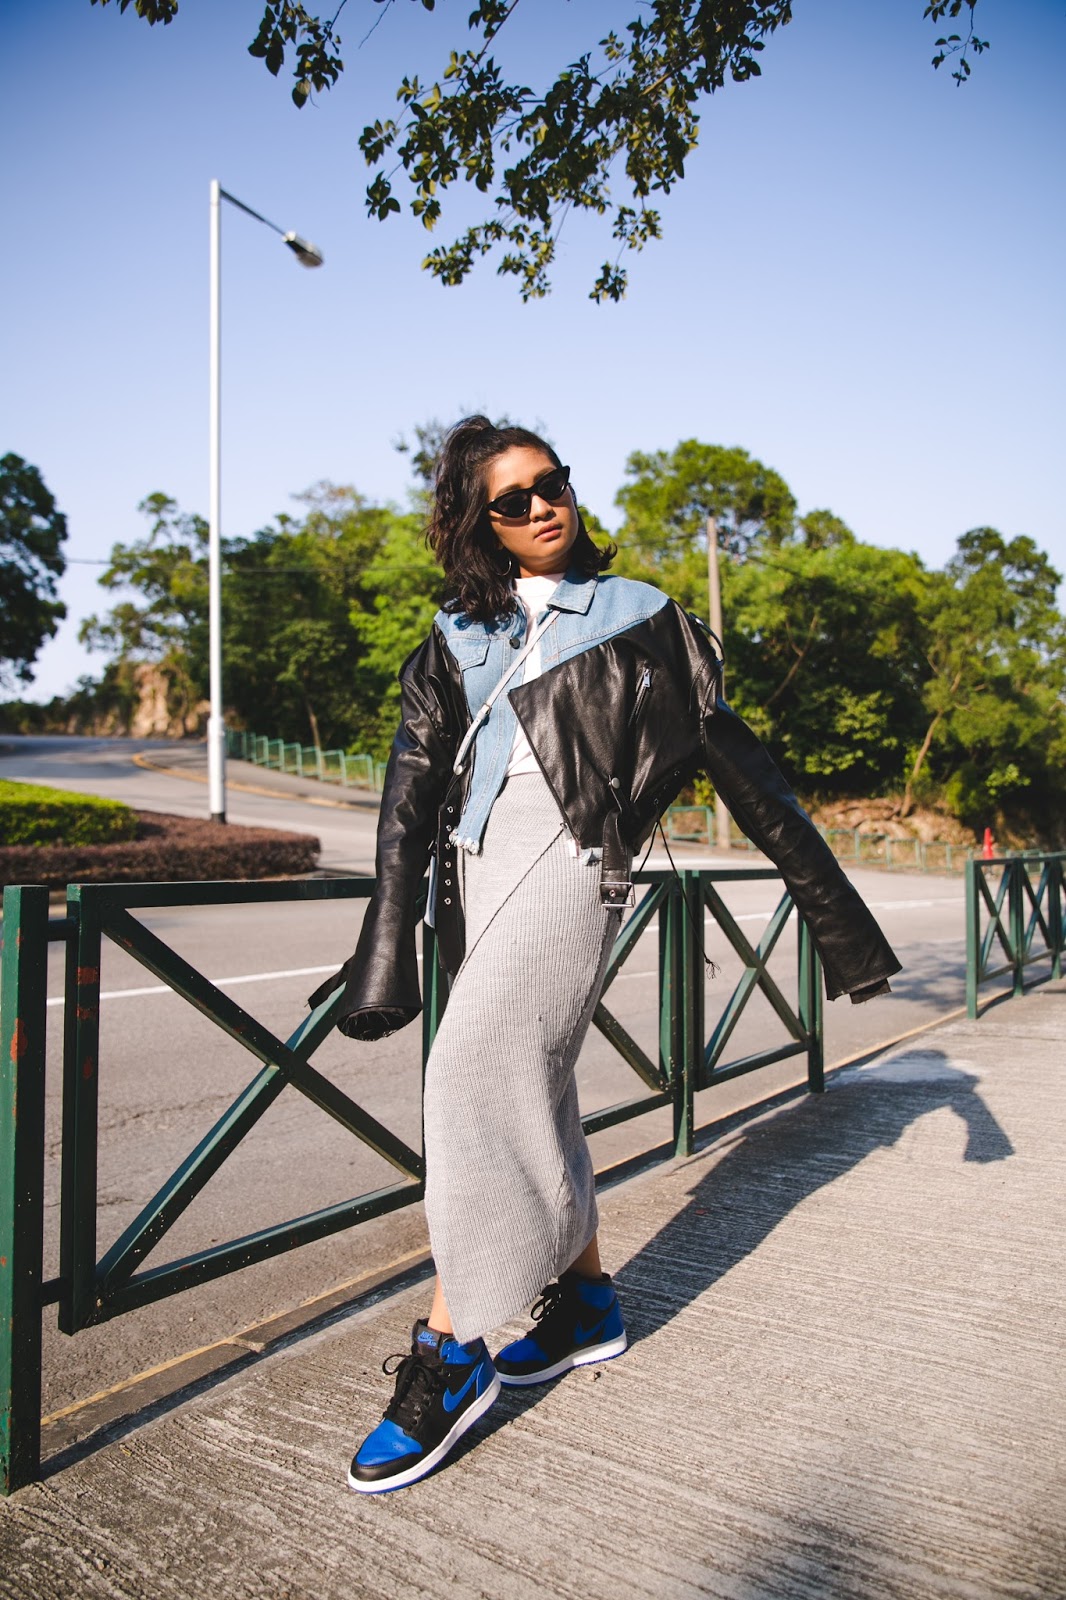 macau fashion blogger wearing denim and leather jacket